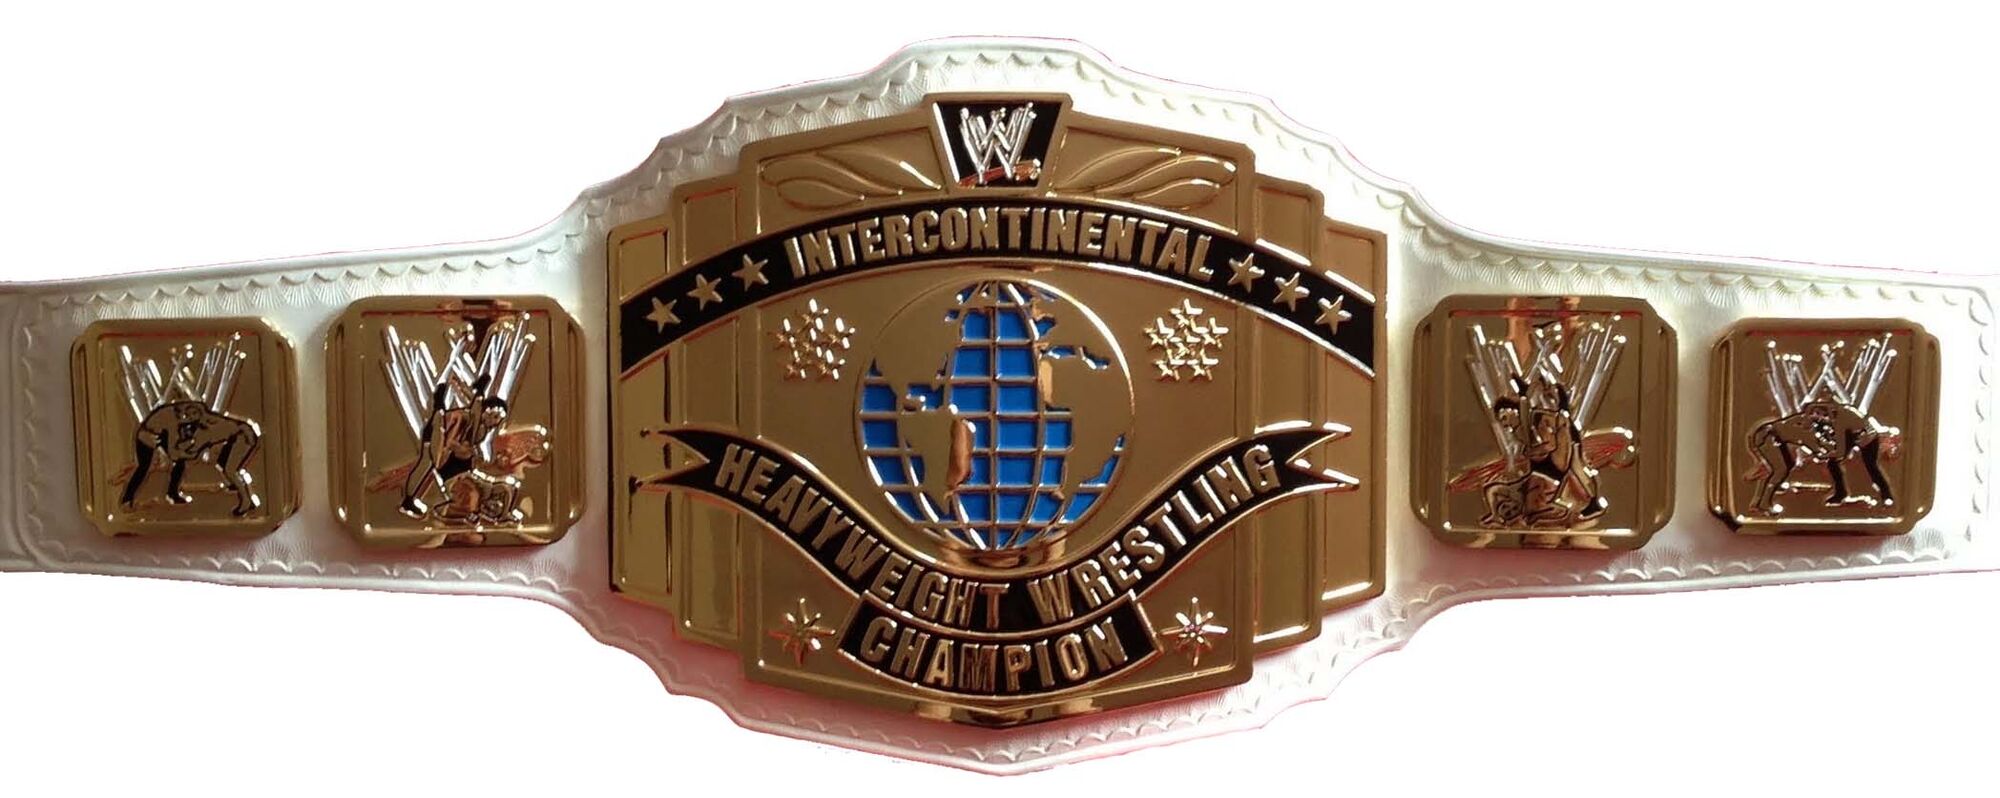 14 Wwe Intercontinental Championship Tournament Pro Wrestling Fandom